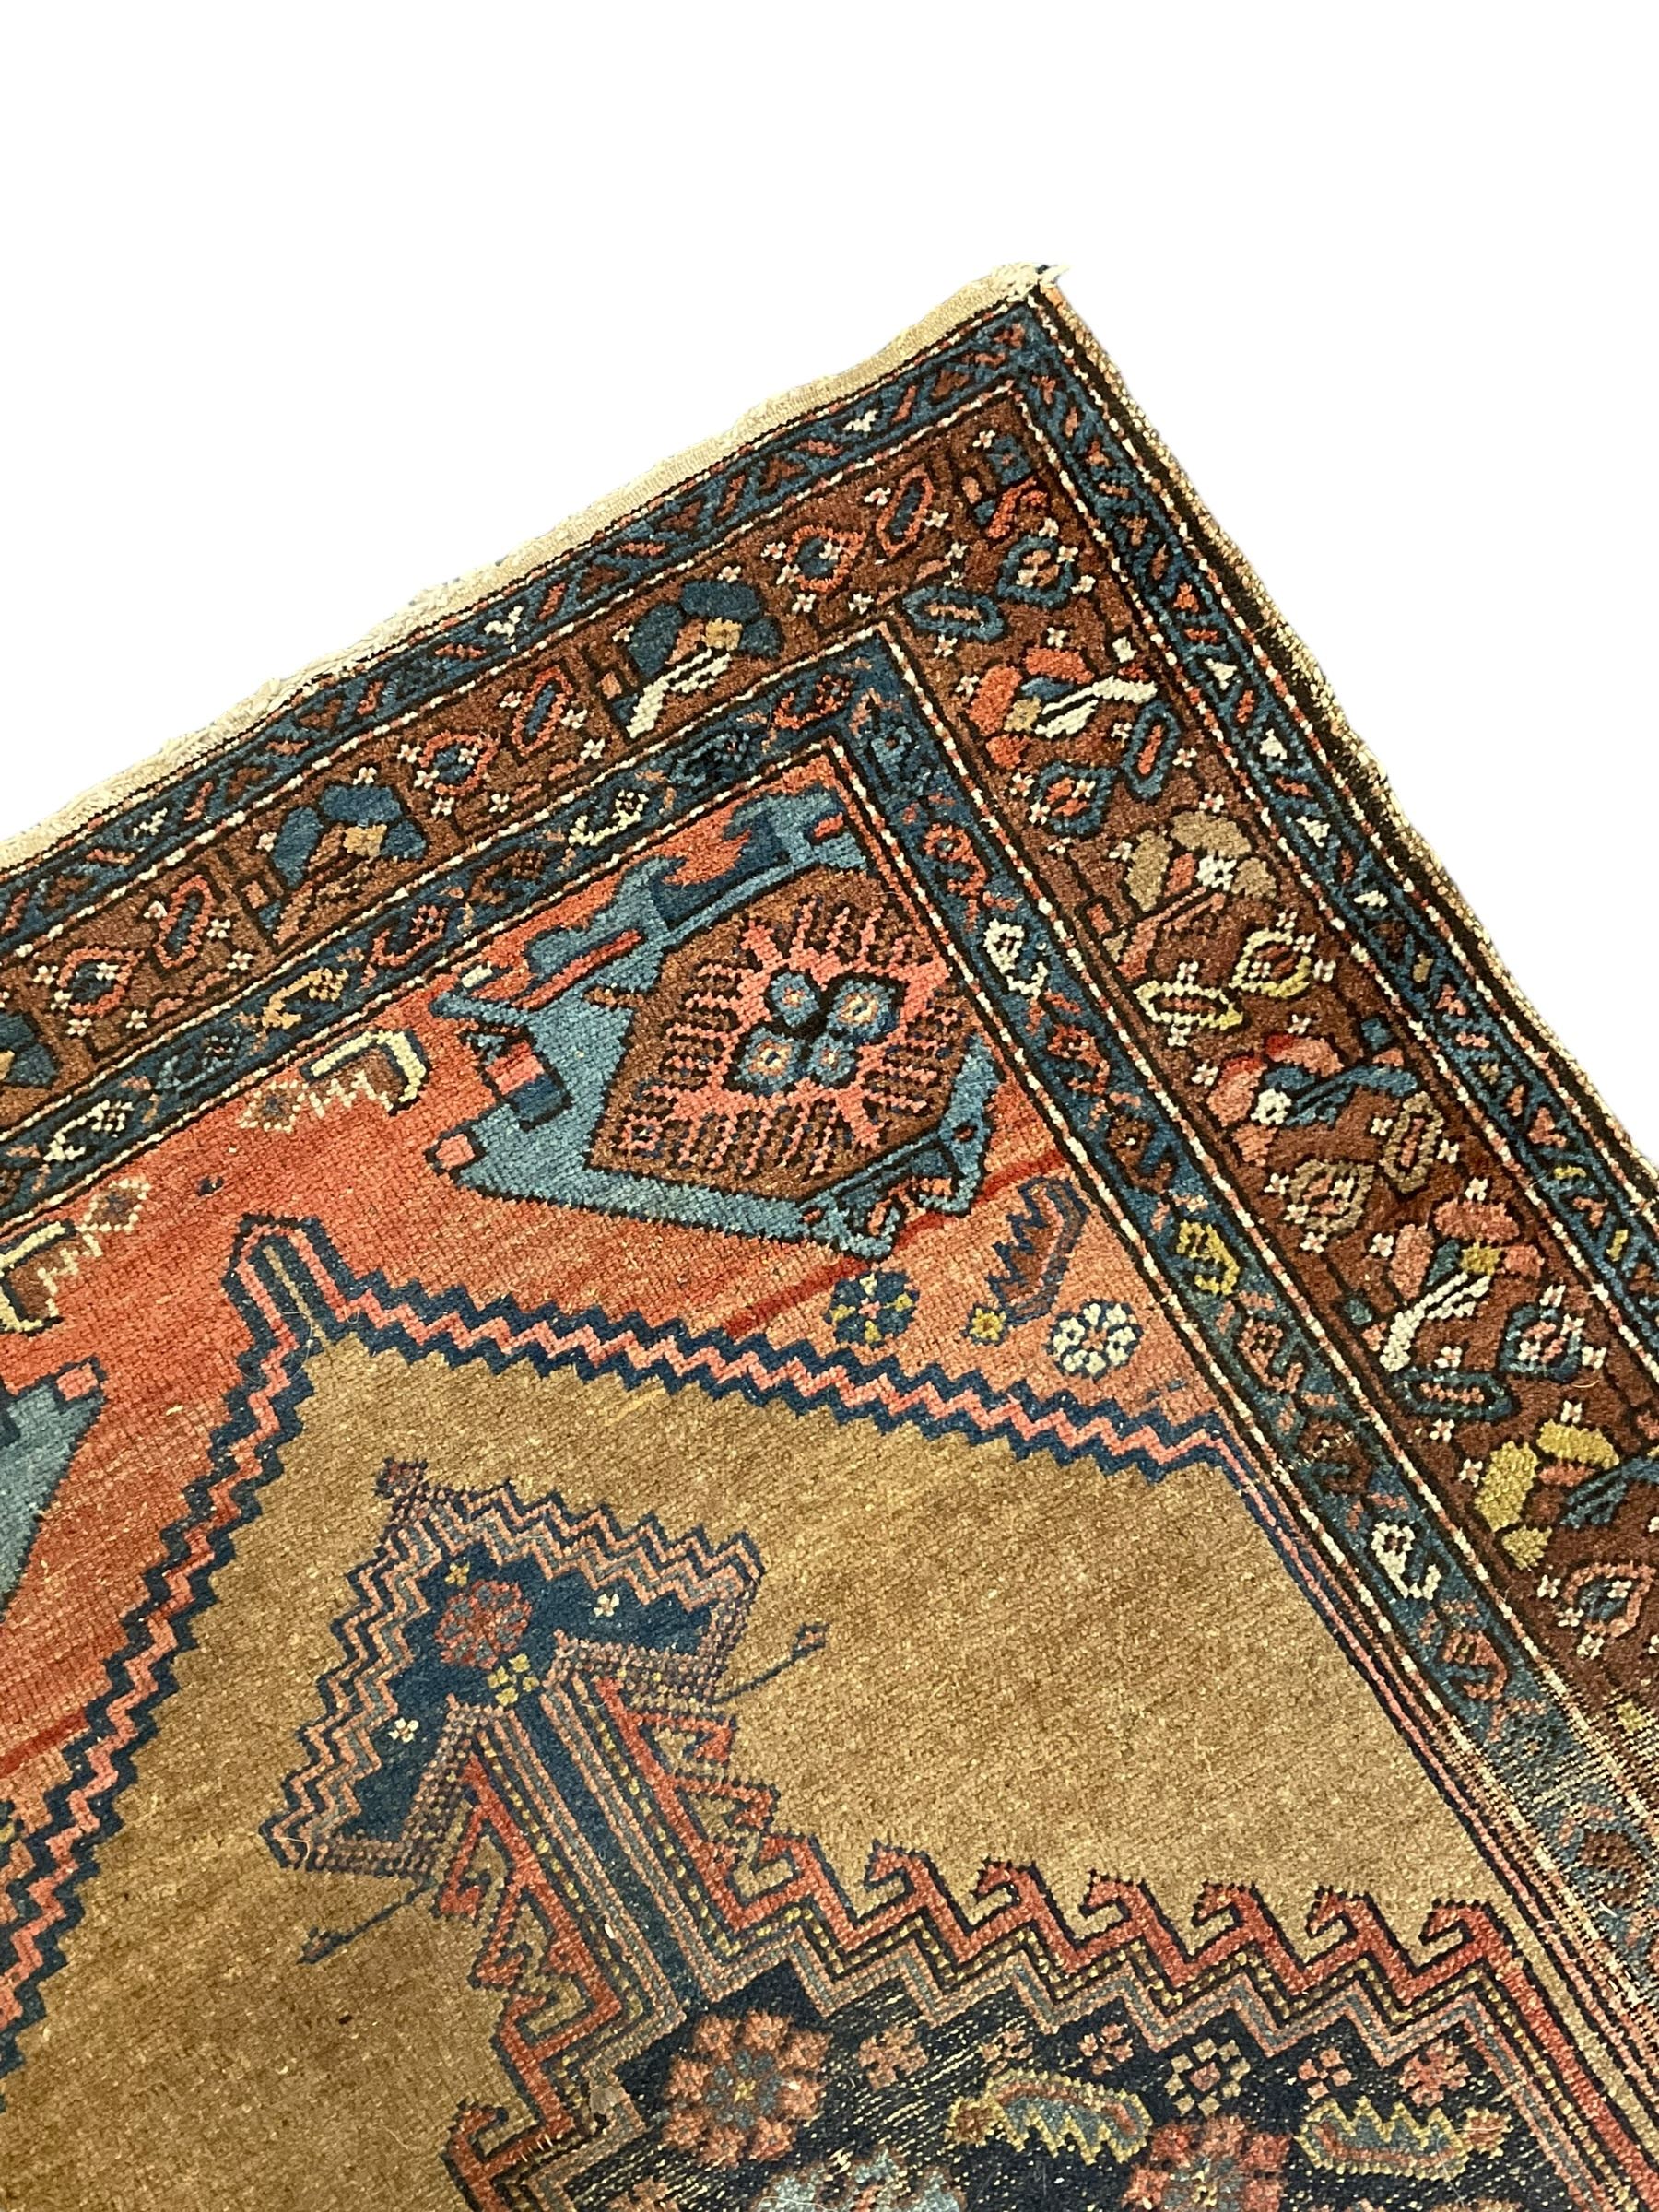 Old Turkish rug - Image 3 of 6